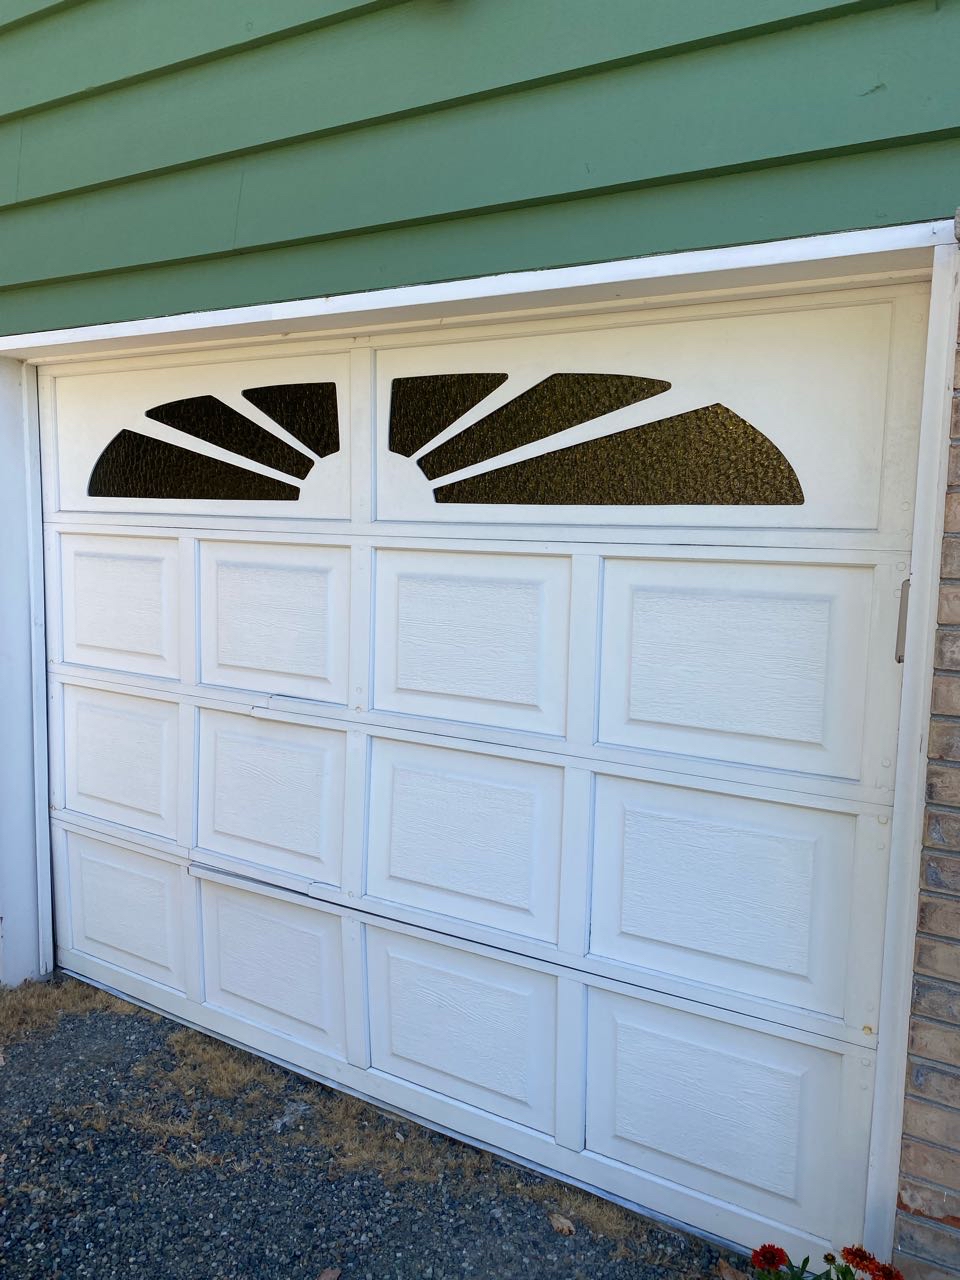 Garage Door Maintenance Near Your Location